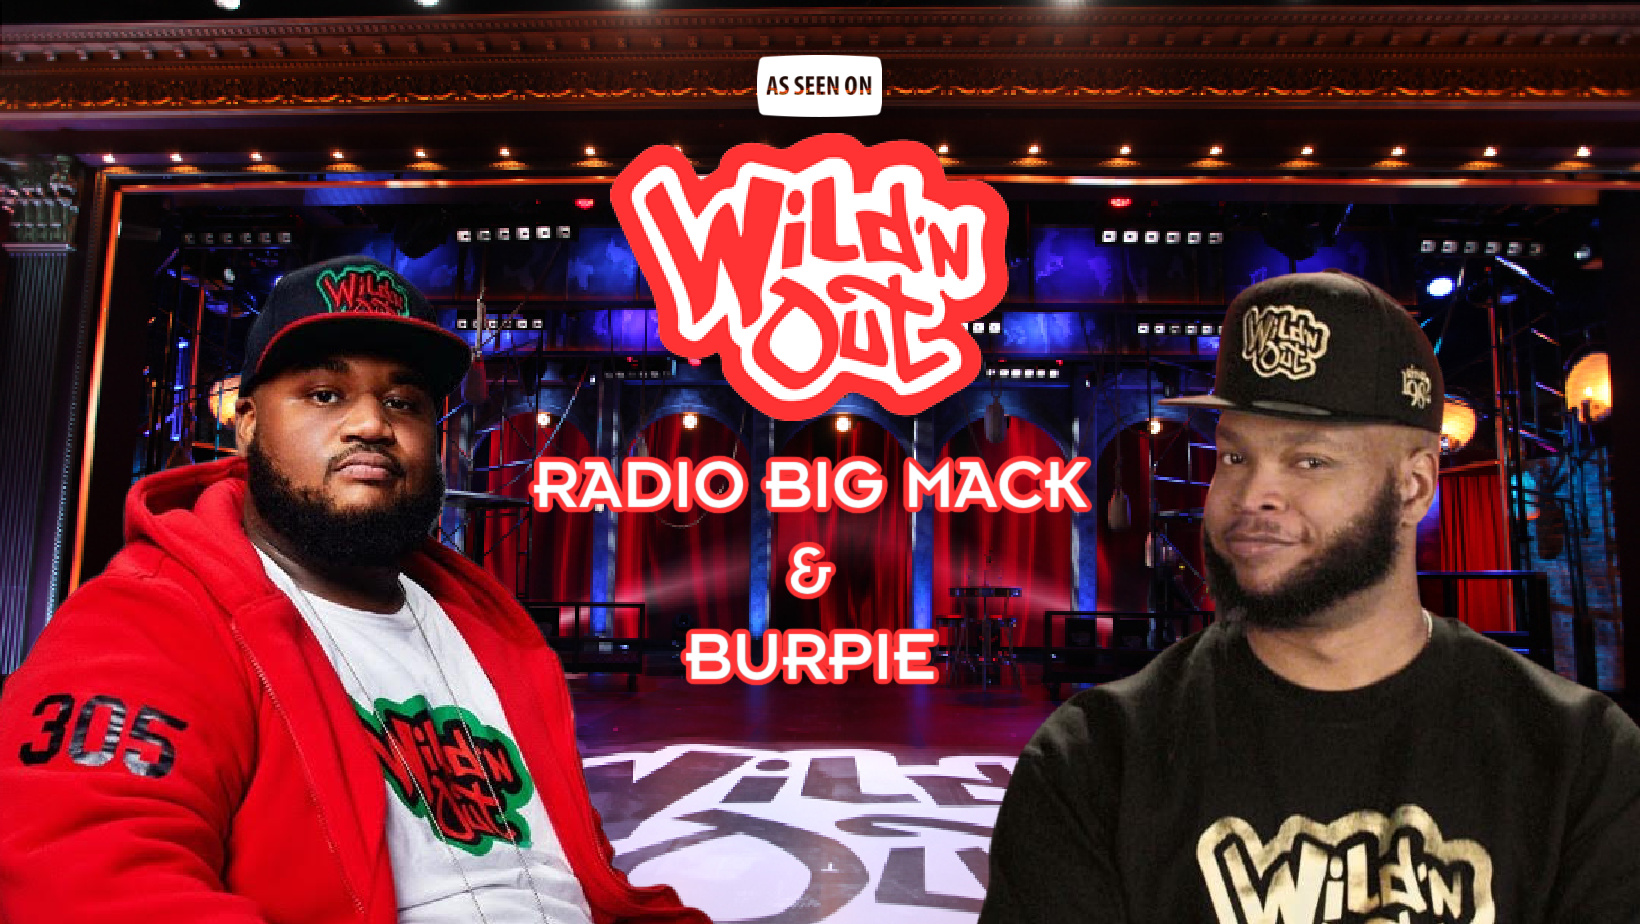 Burpie and Radio Big Mack